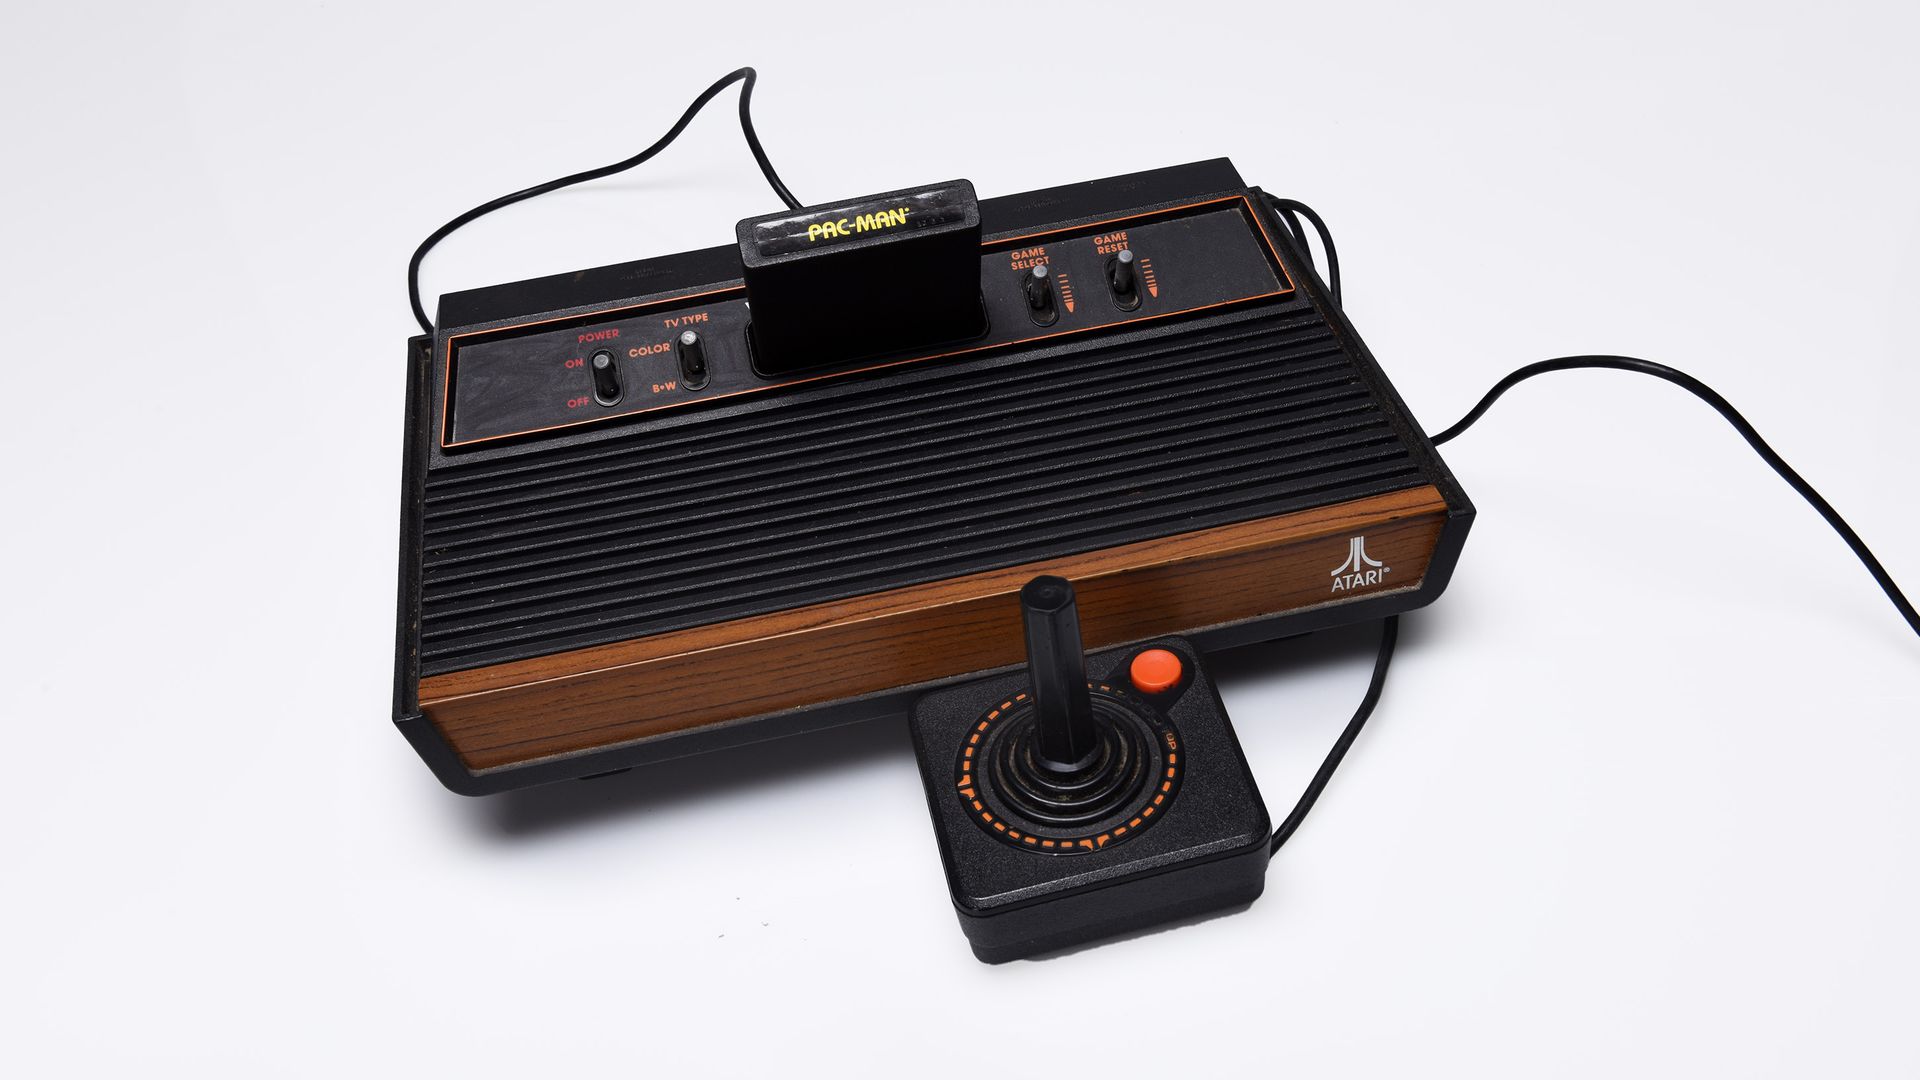 Photograph of a classic Atari game console and joystick